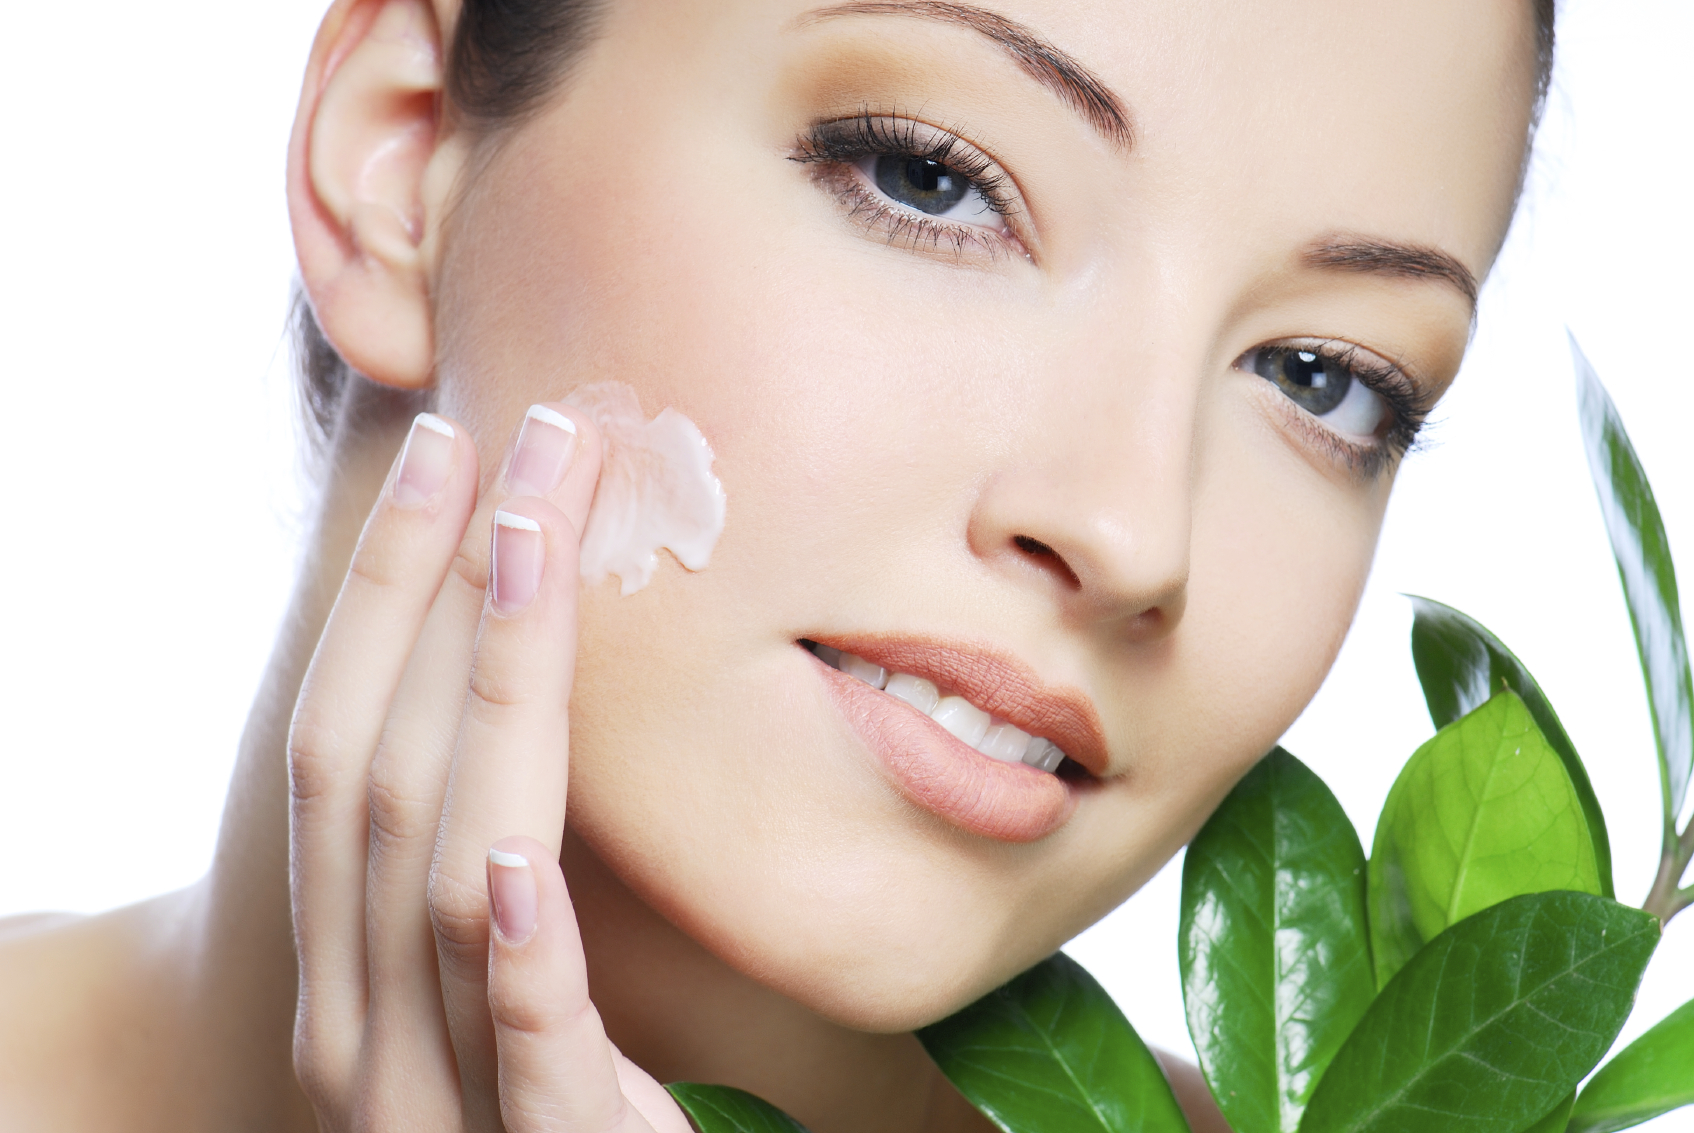 Woman applying anti aging cream on face.